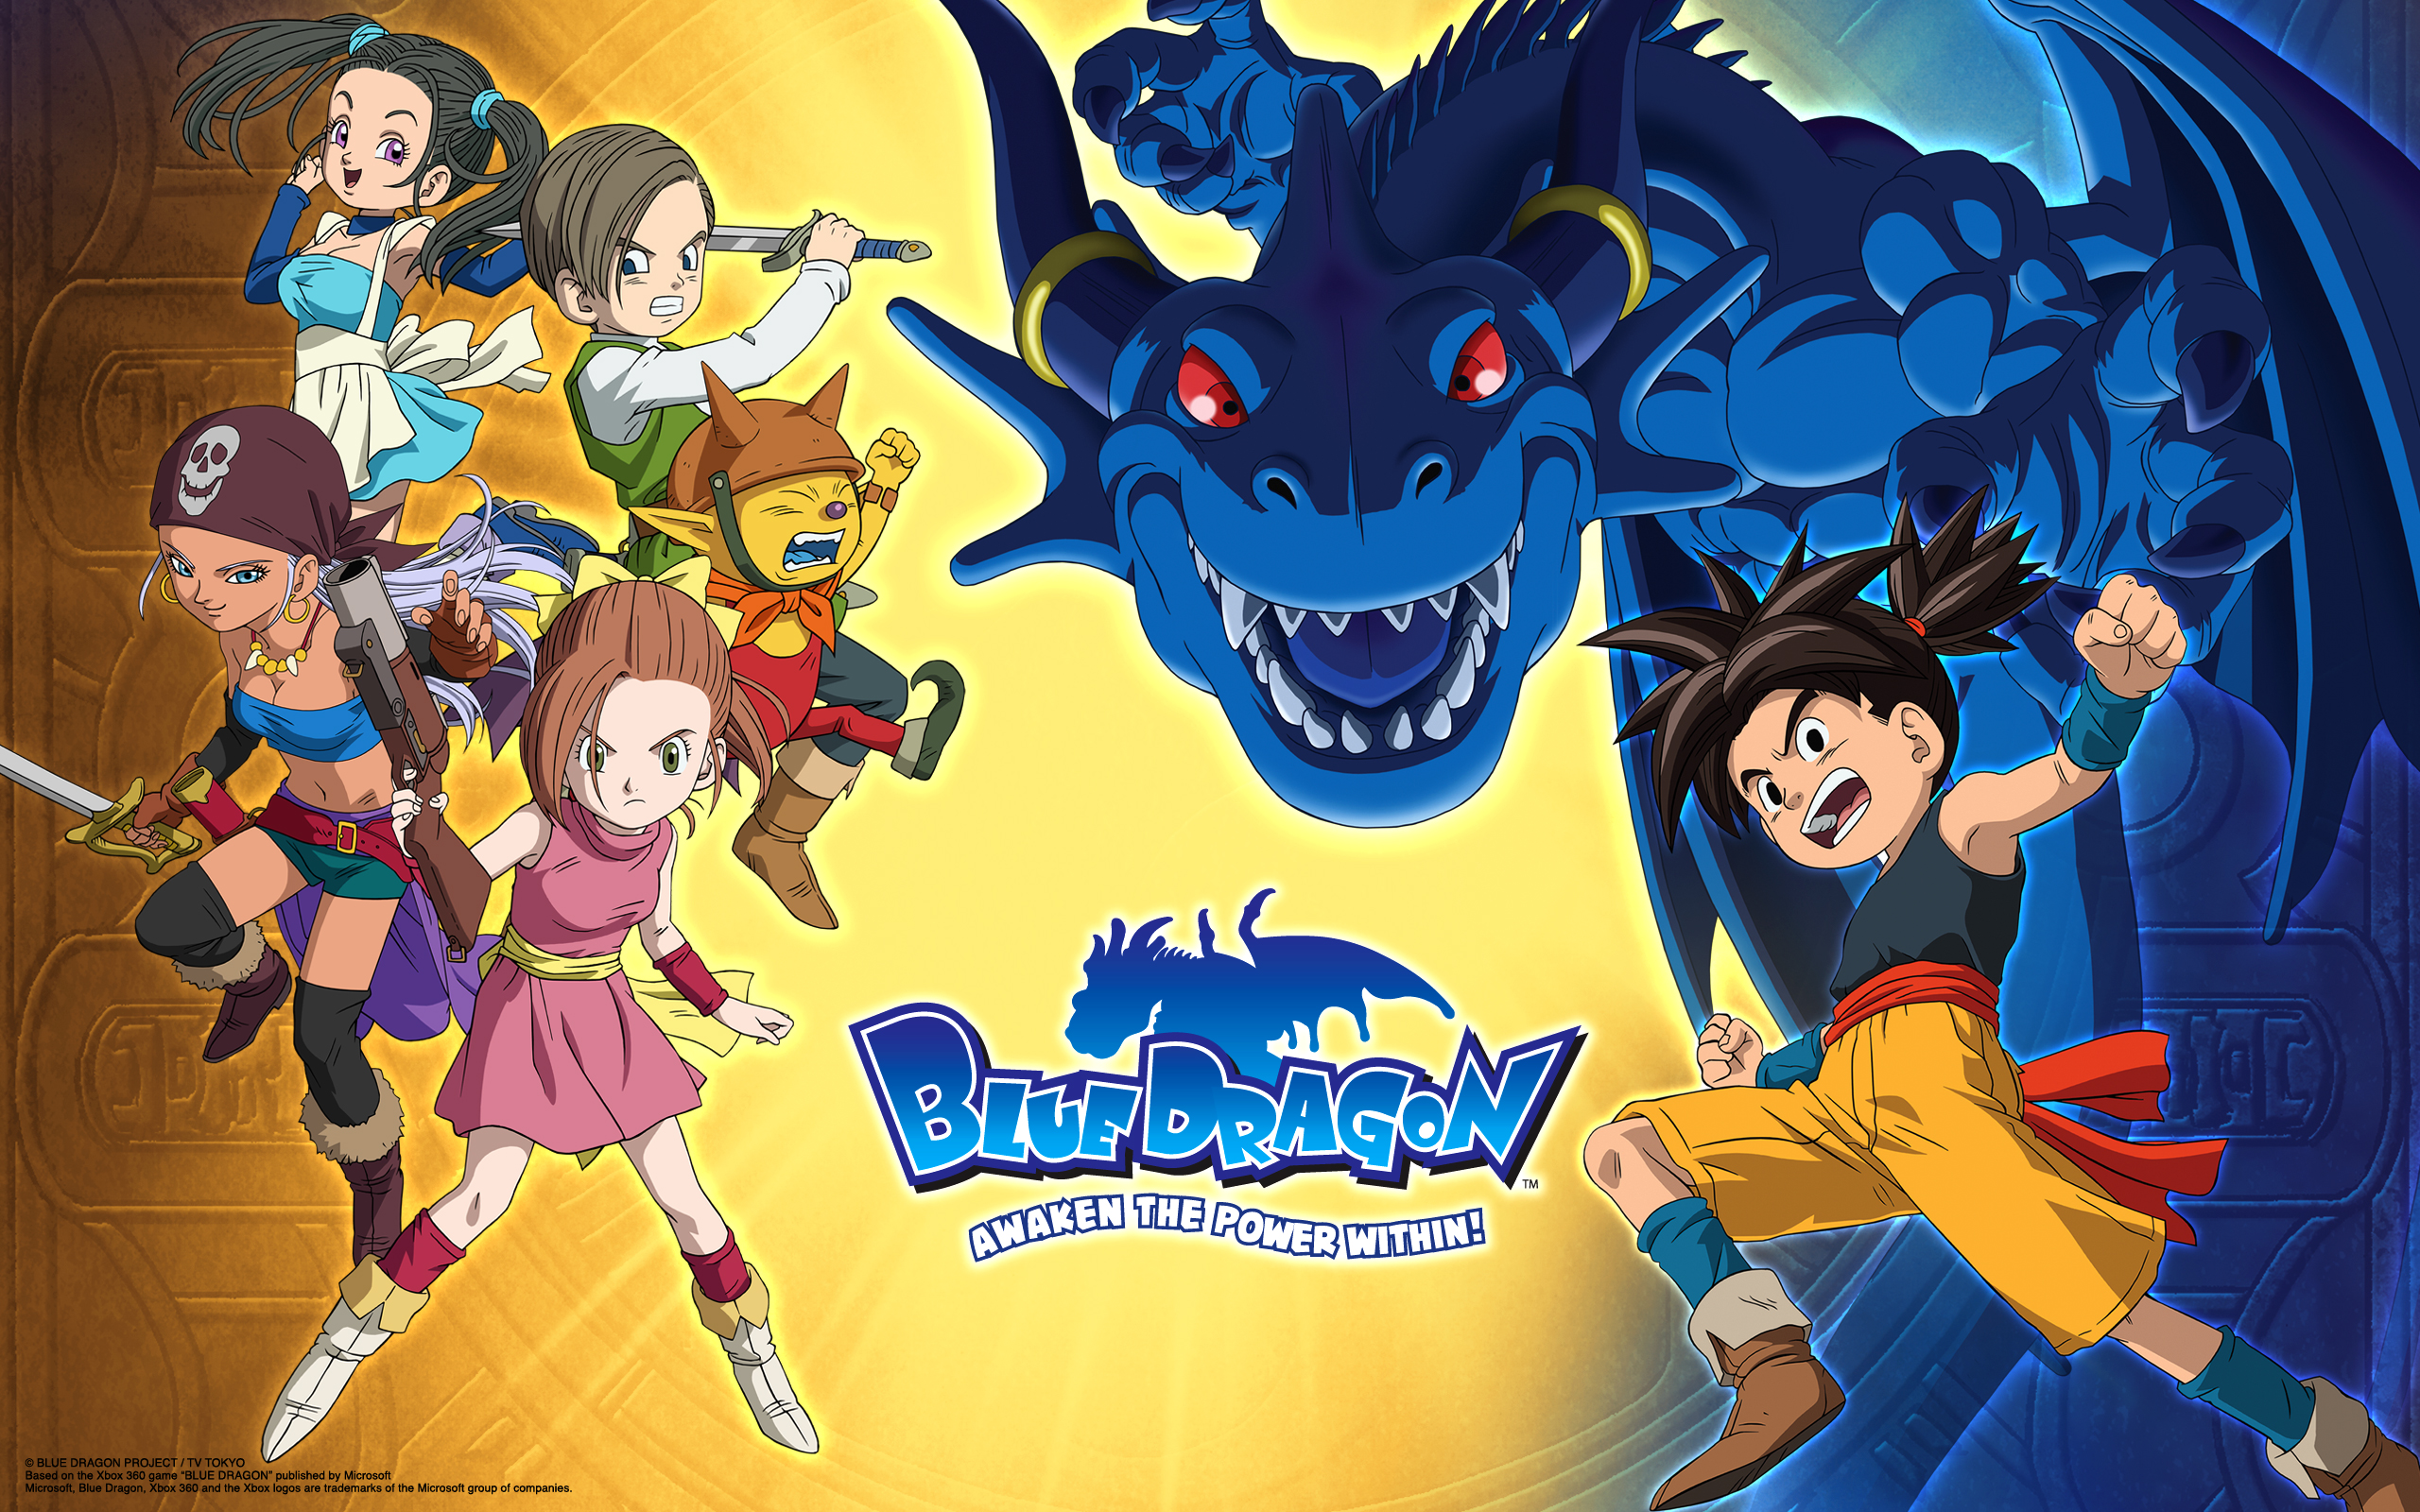 Watch Blue Dragon Uncut Streaming Online | Hulu (Free Trial)